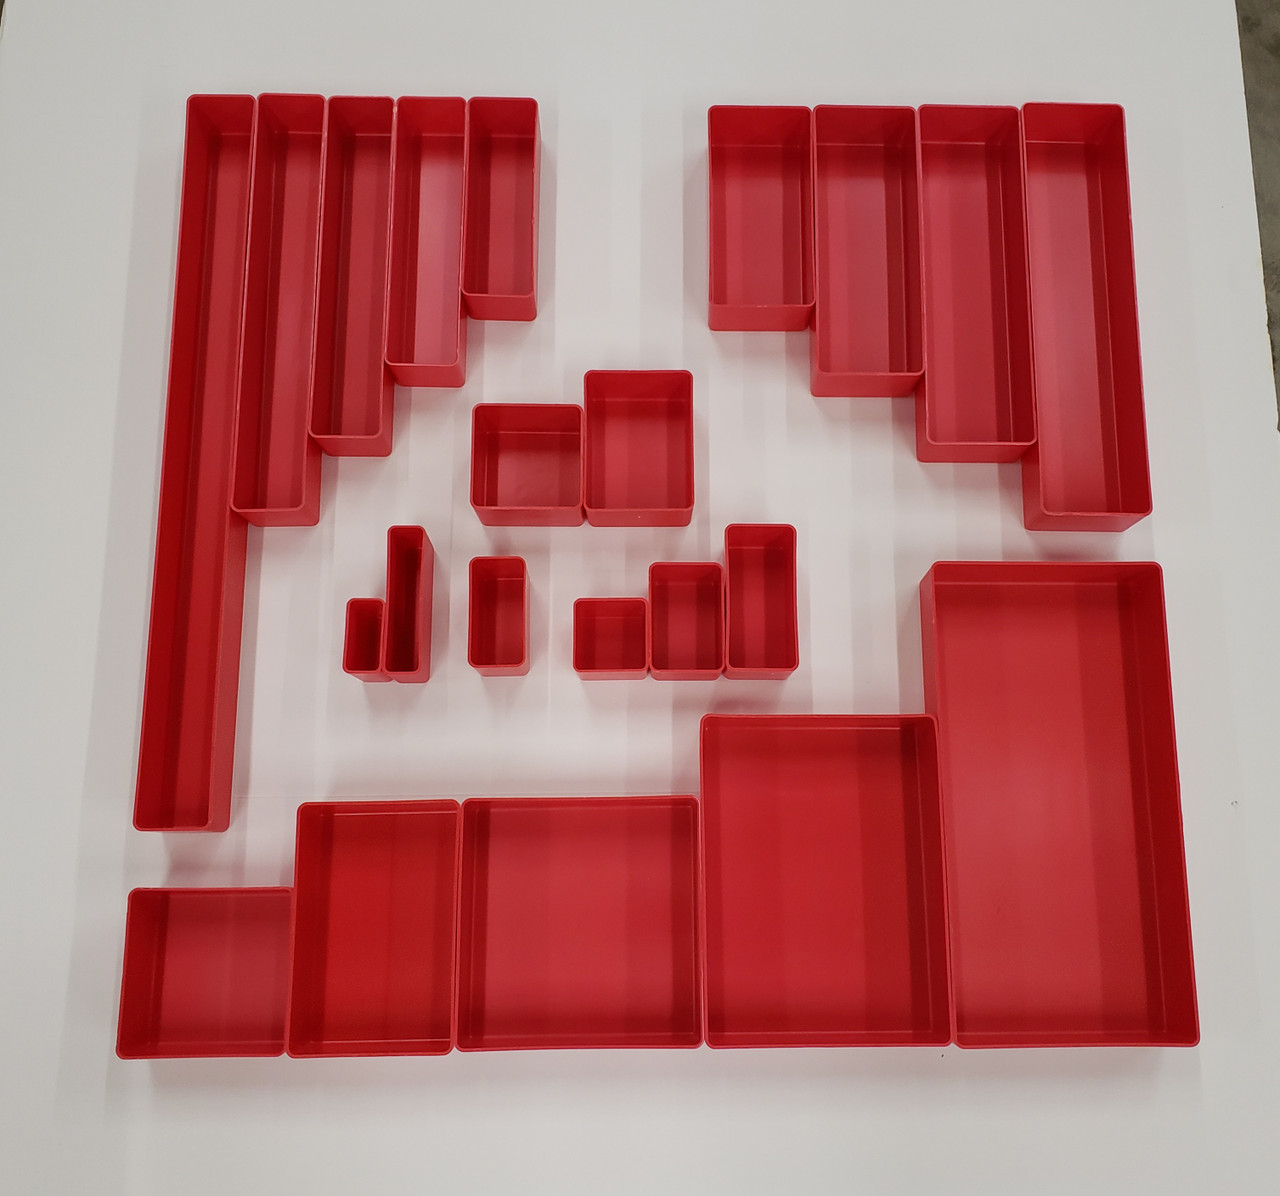 2 deep red plastic assortment tool box orgainzer